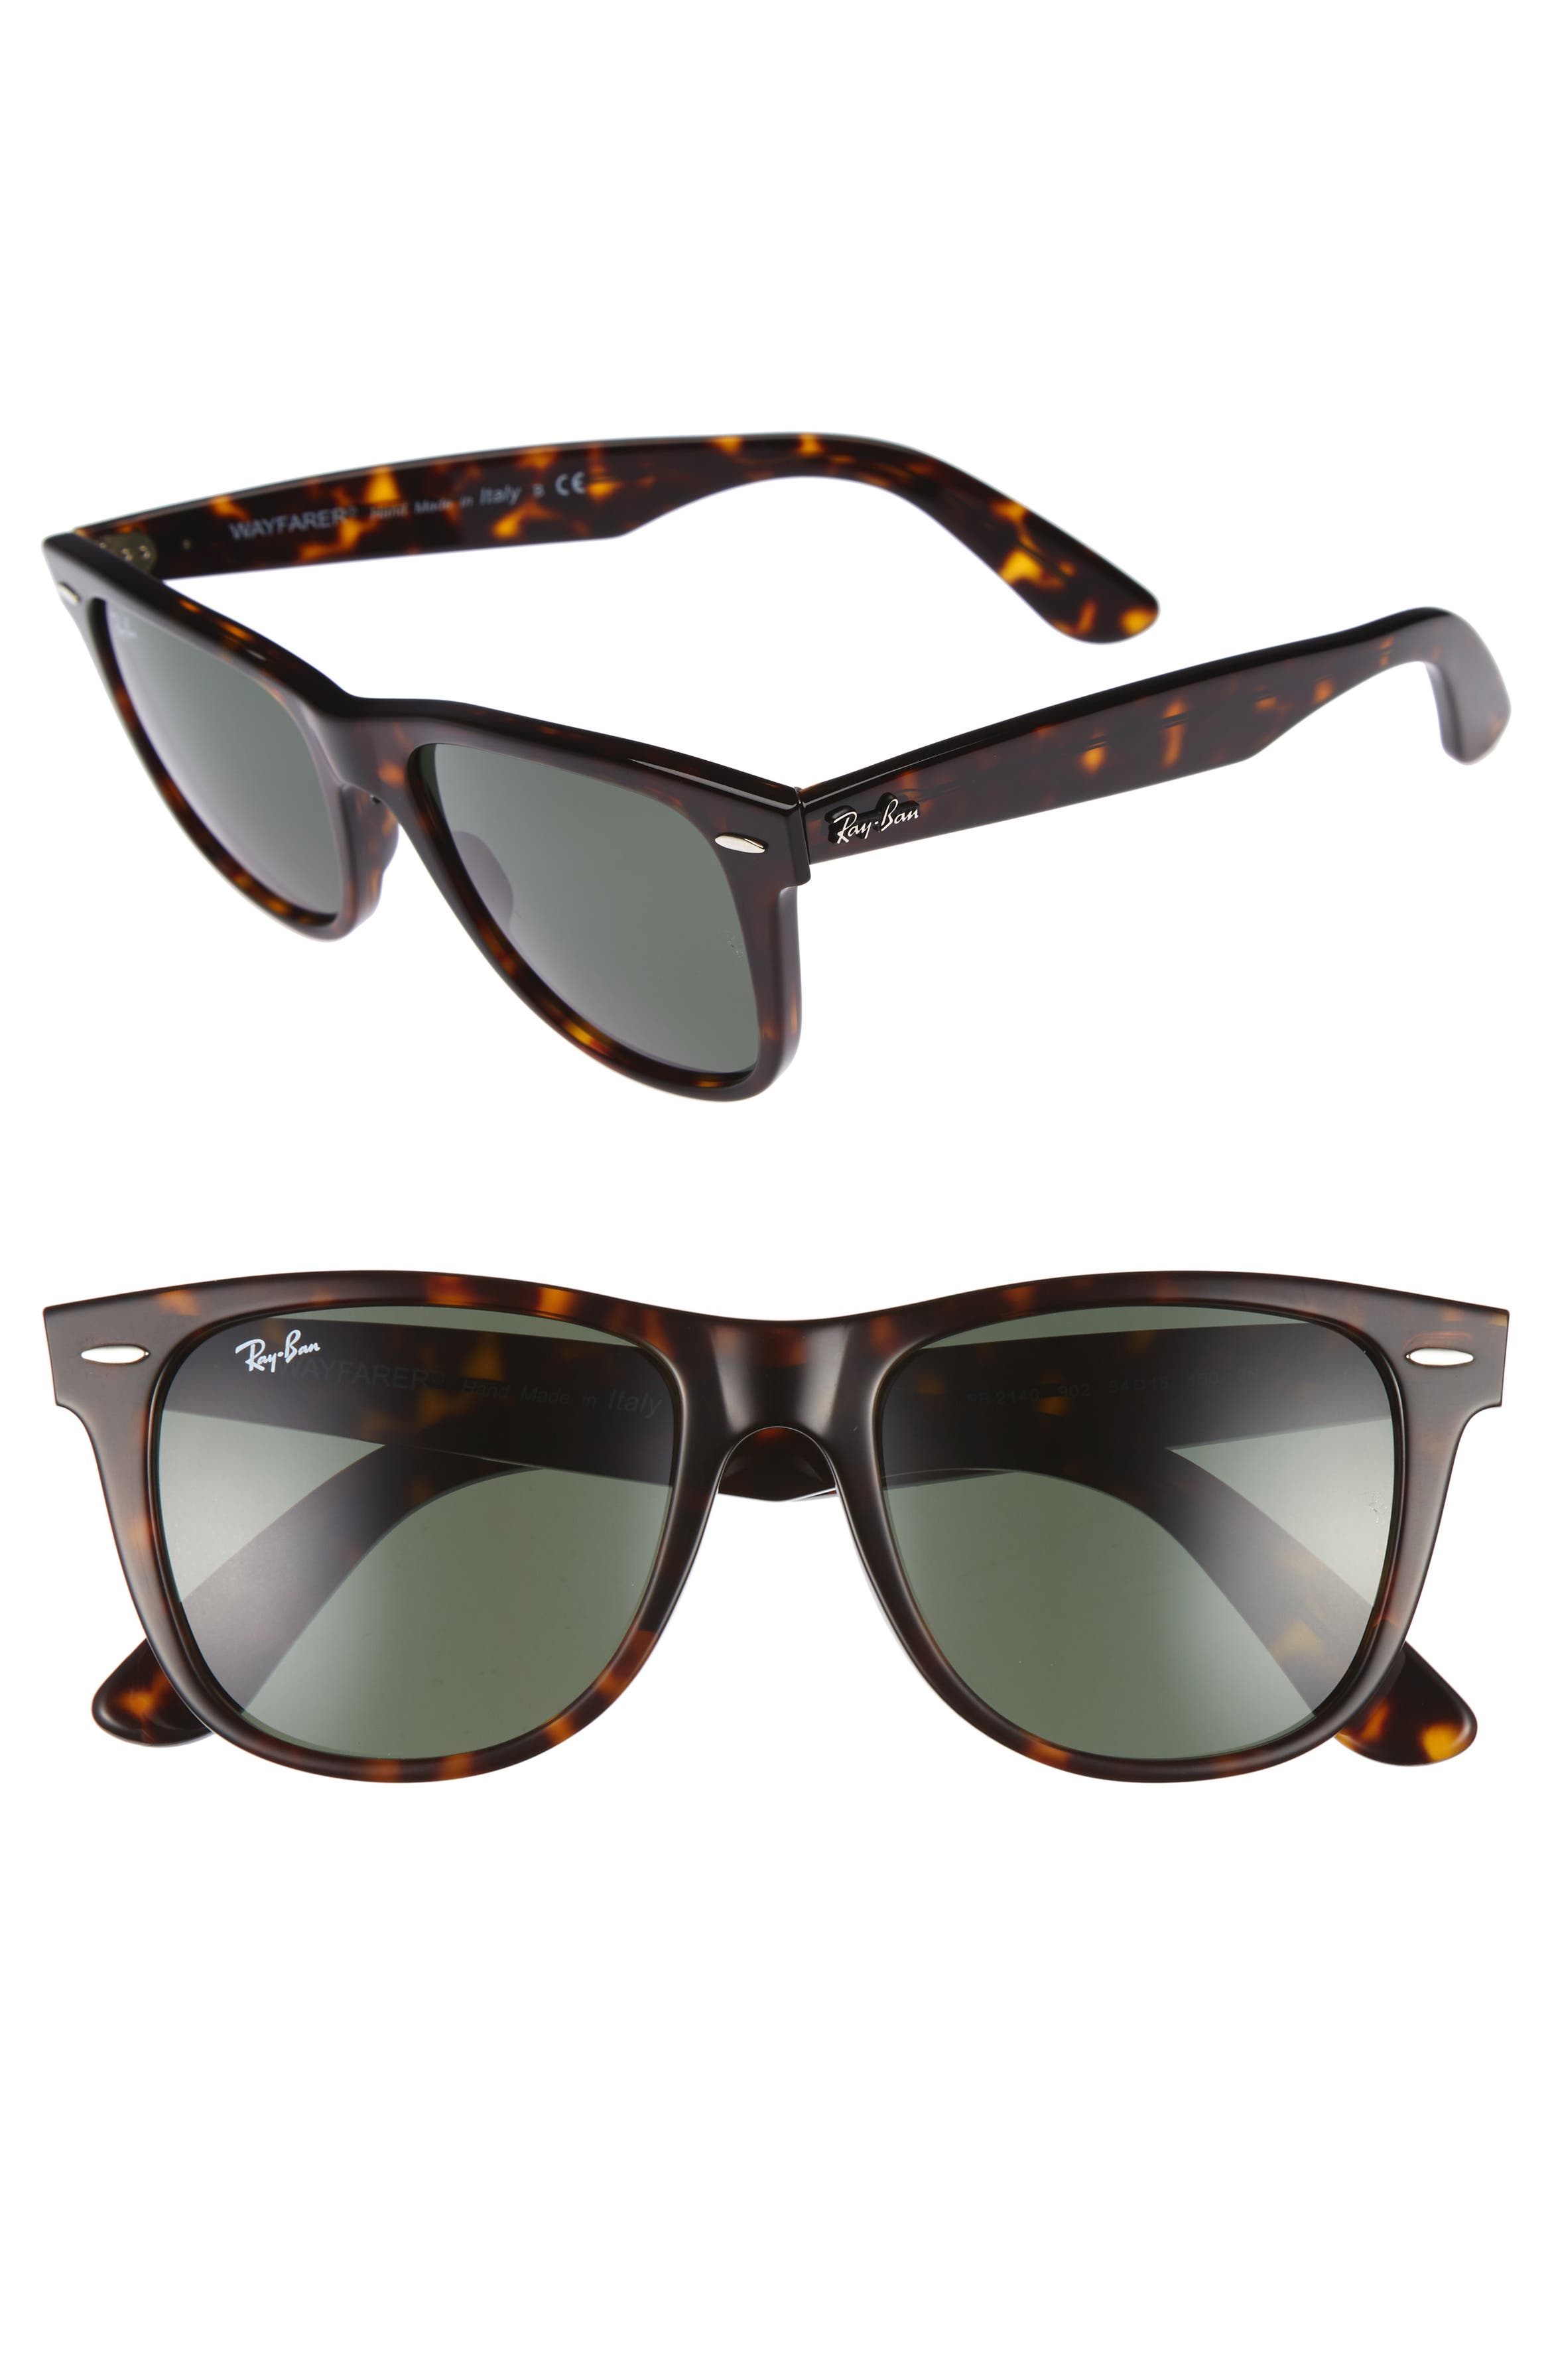 Ray Ban Classic Wayfarer 54mm Sunglasses Nordstrom